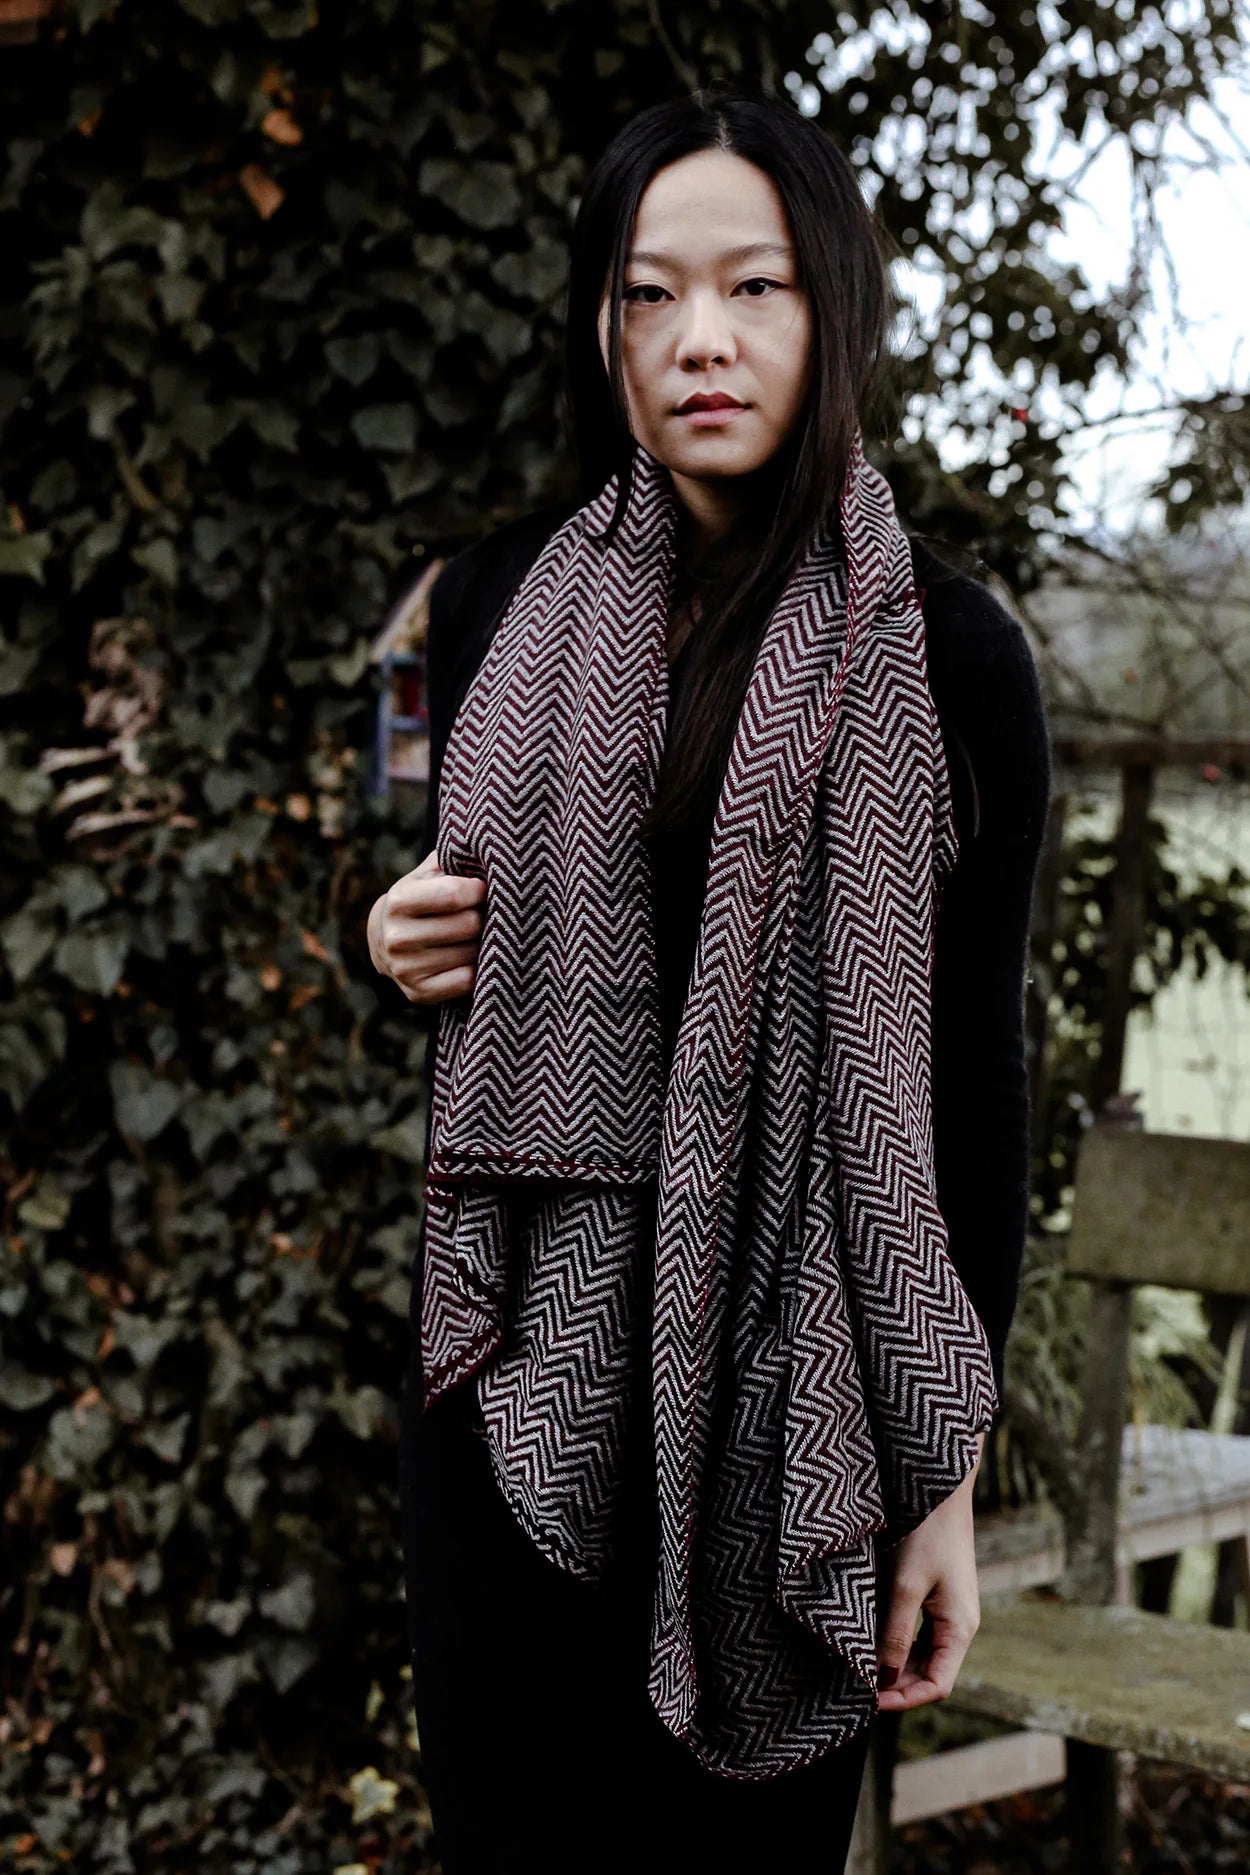 wool shawl, warm shawl, handmade shawl, doti sutra, shawl switzerland